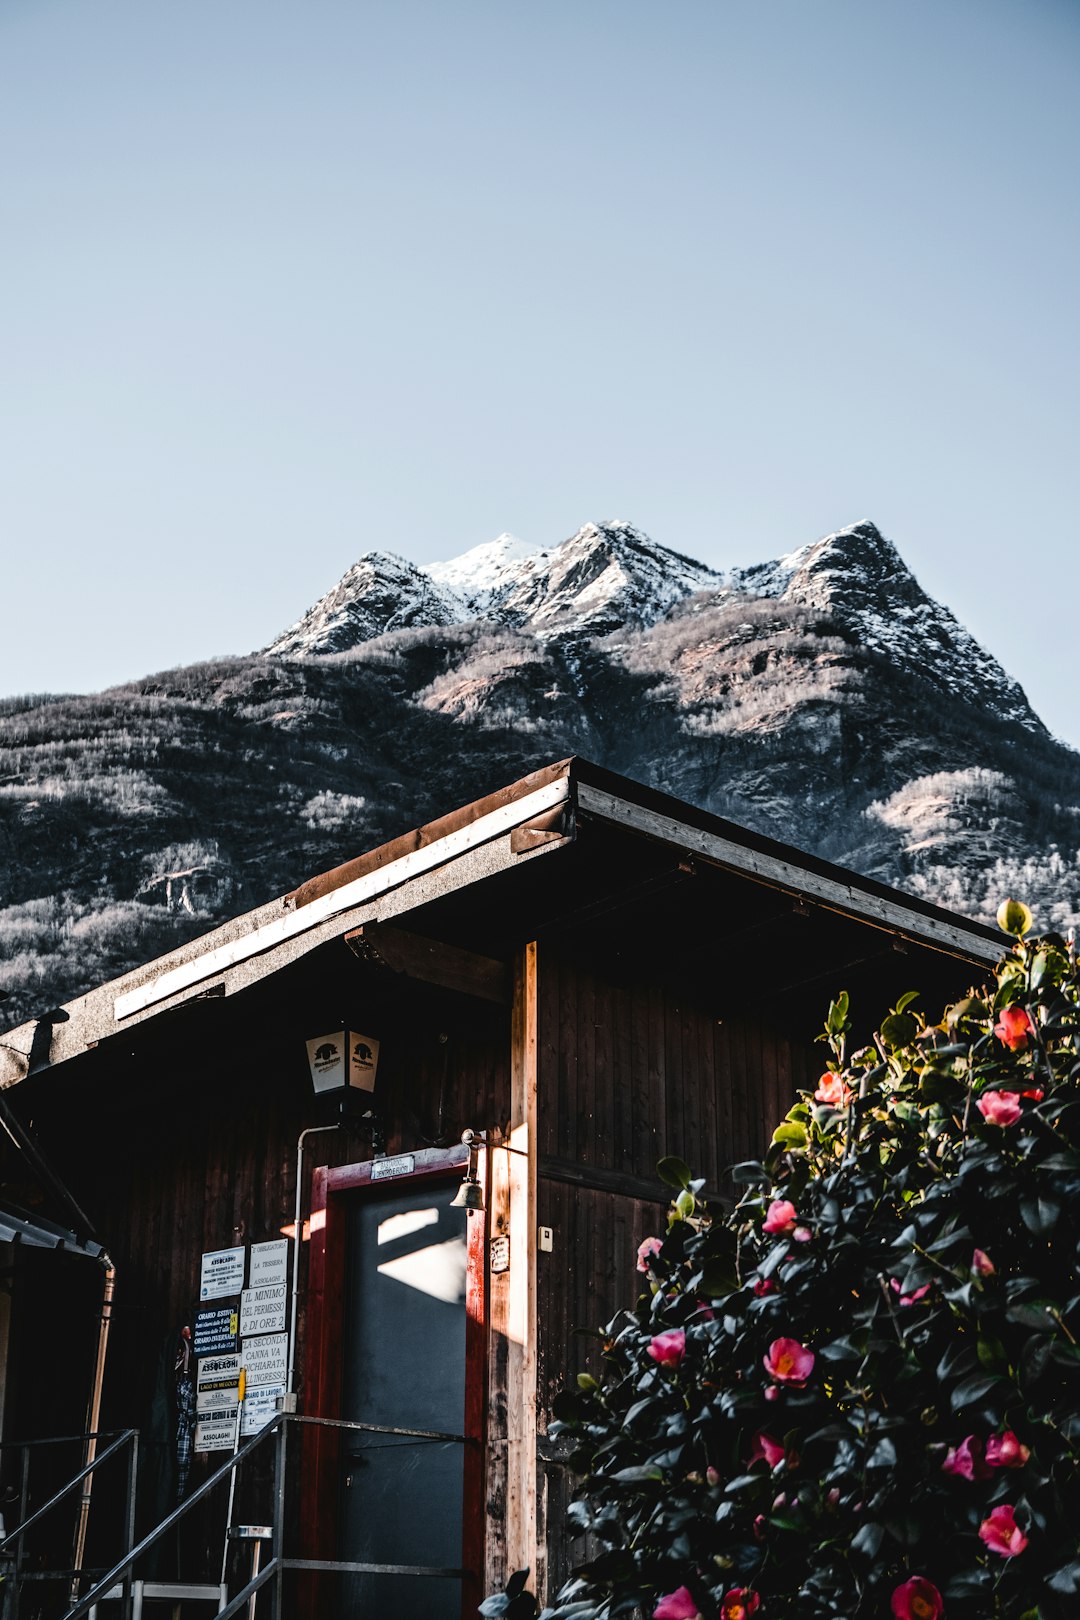 Hill station photo spot Villadossola Gran Paradiso Alps